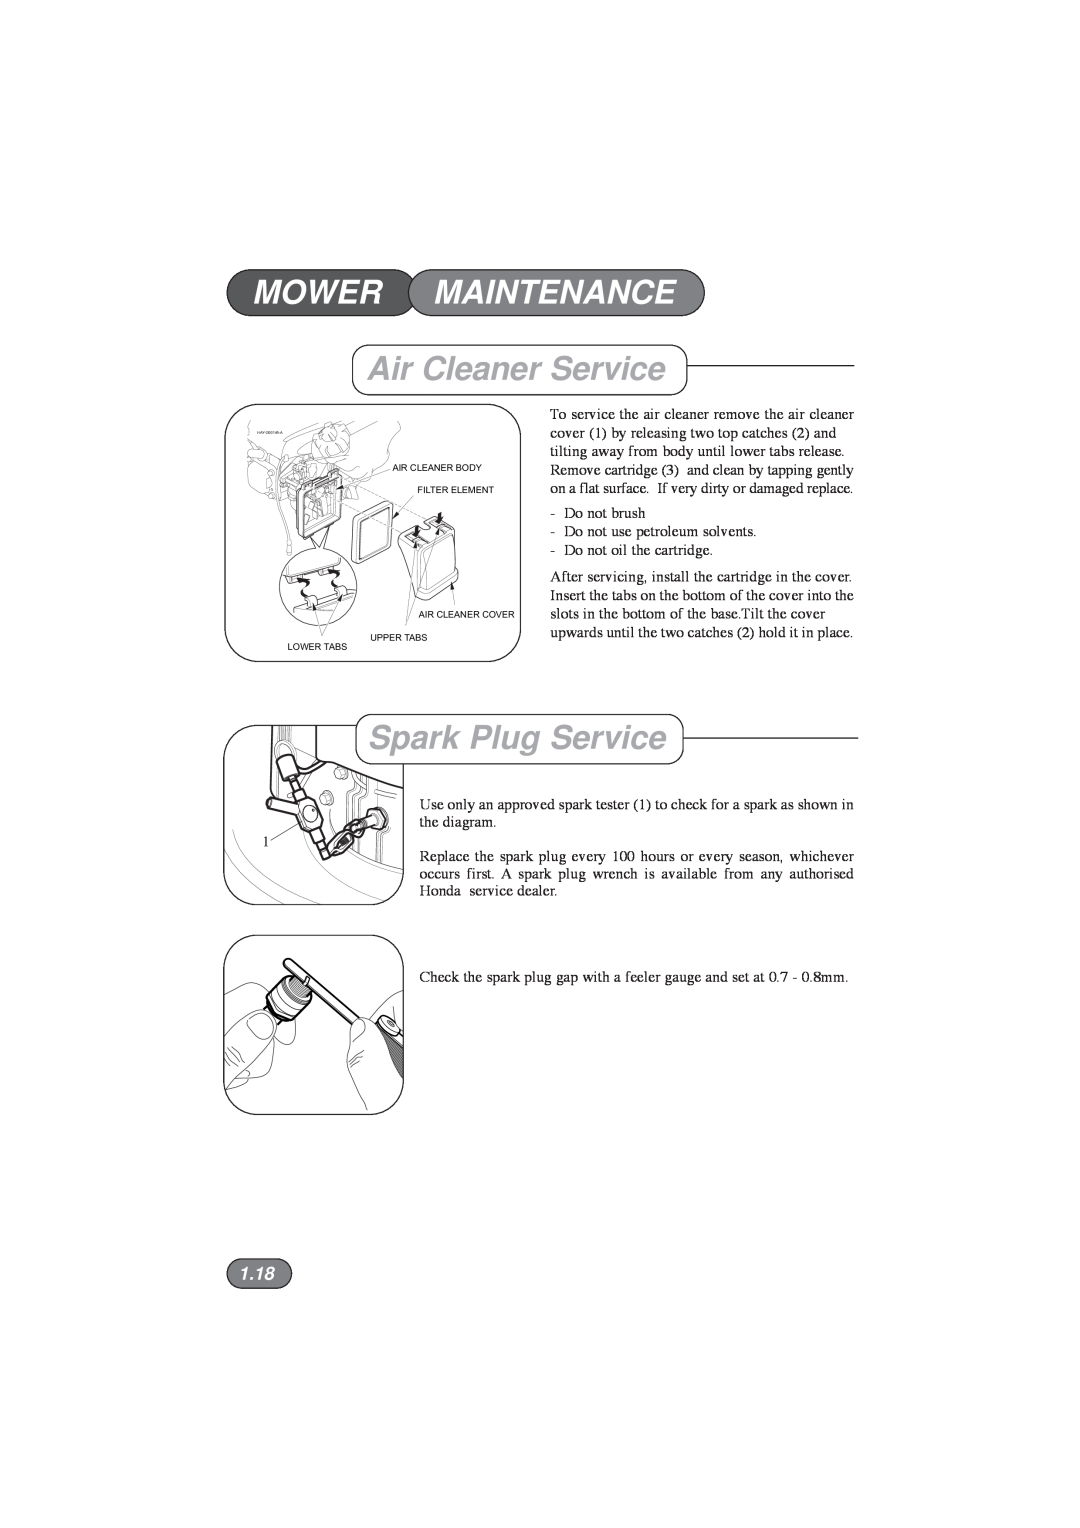 Hayter Mowers 185E XR16, 184E XR44 manual Air Cleaner Service, Spark Plug Service, 1.18, Mower Maintenance 